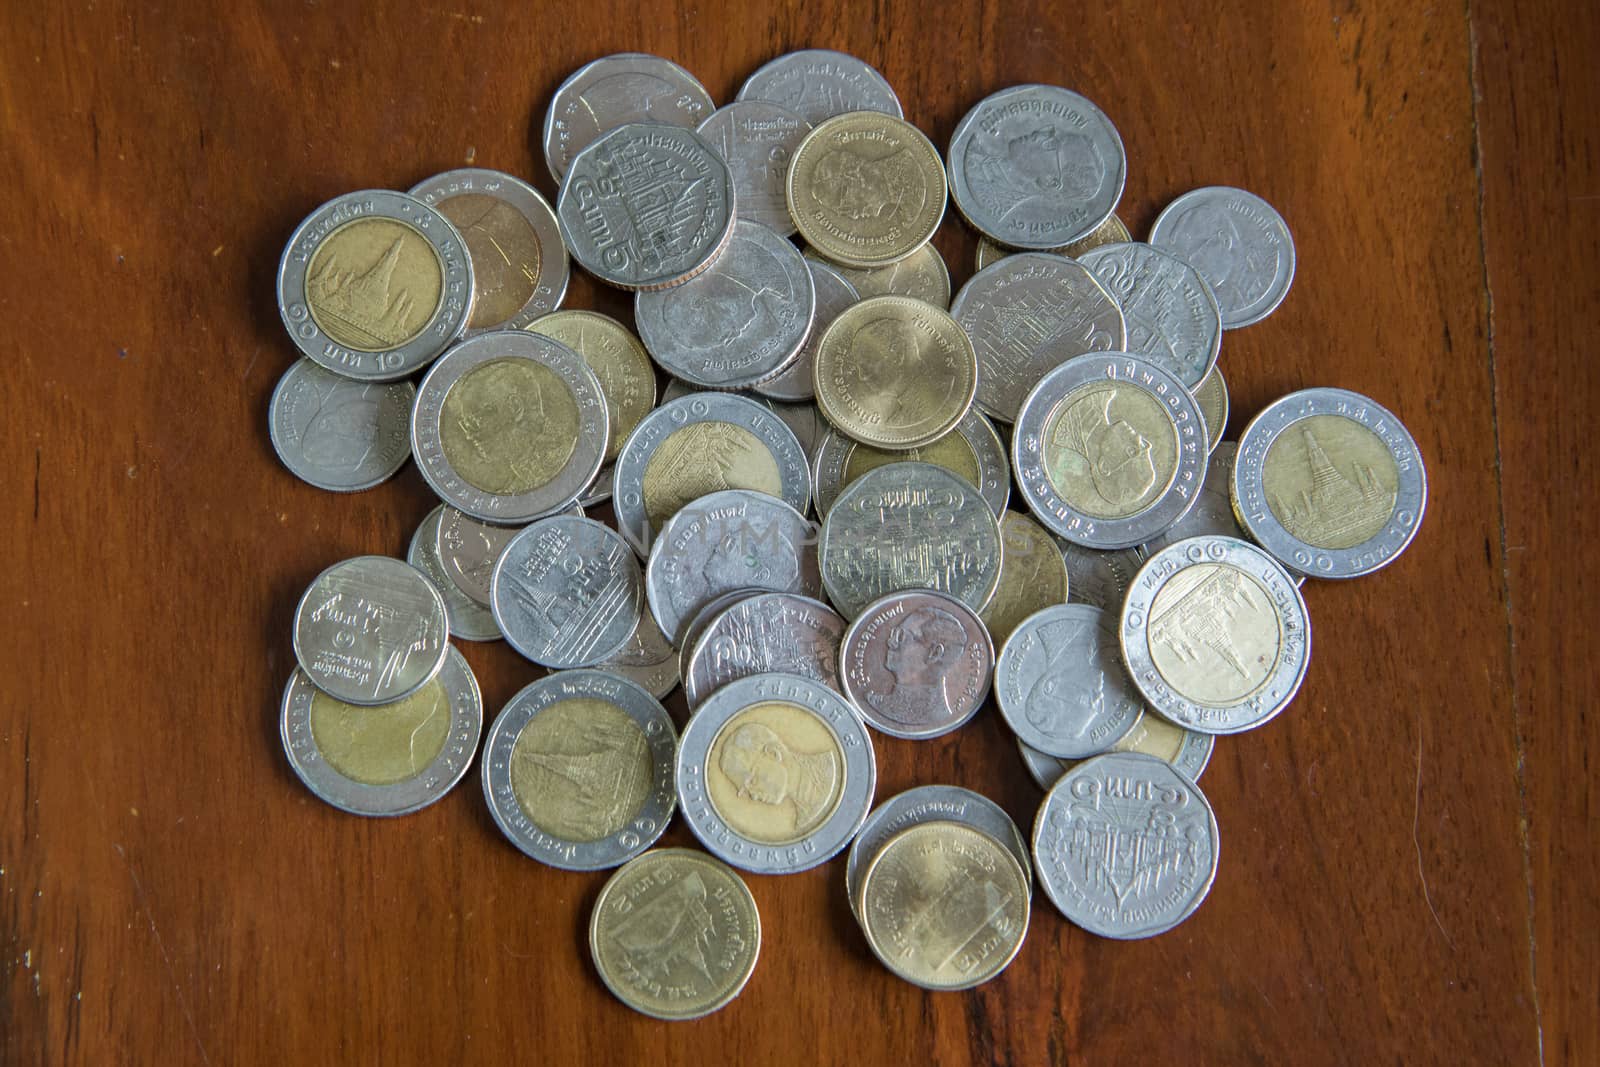 Many coin thailand bath